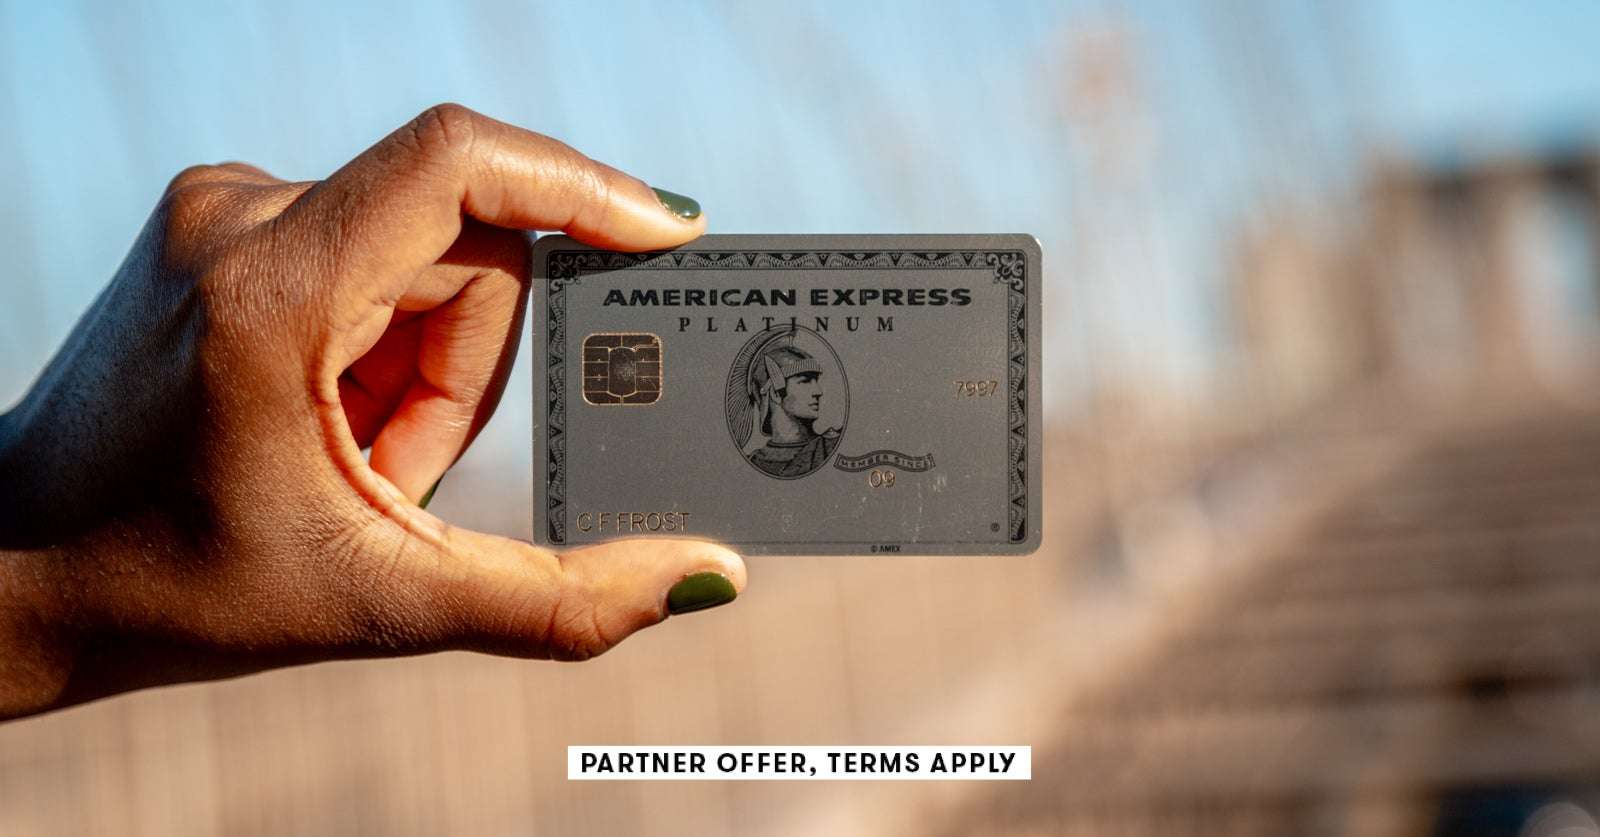 American Express Platinum Card: Benefits and perks